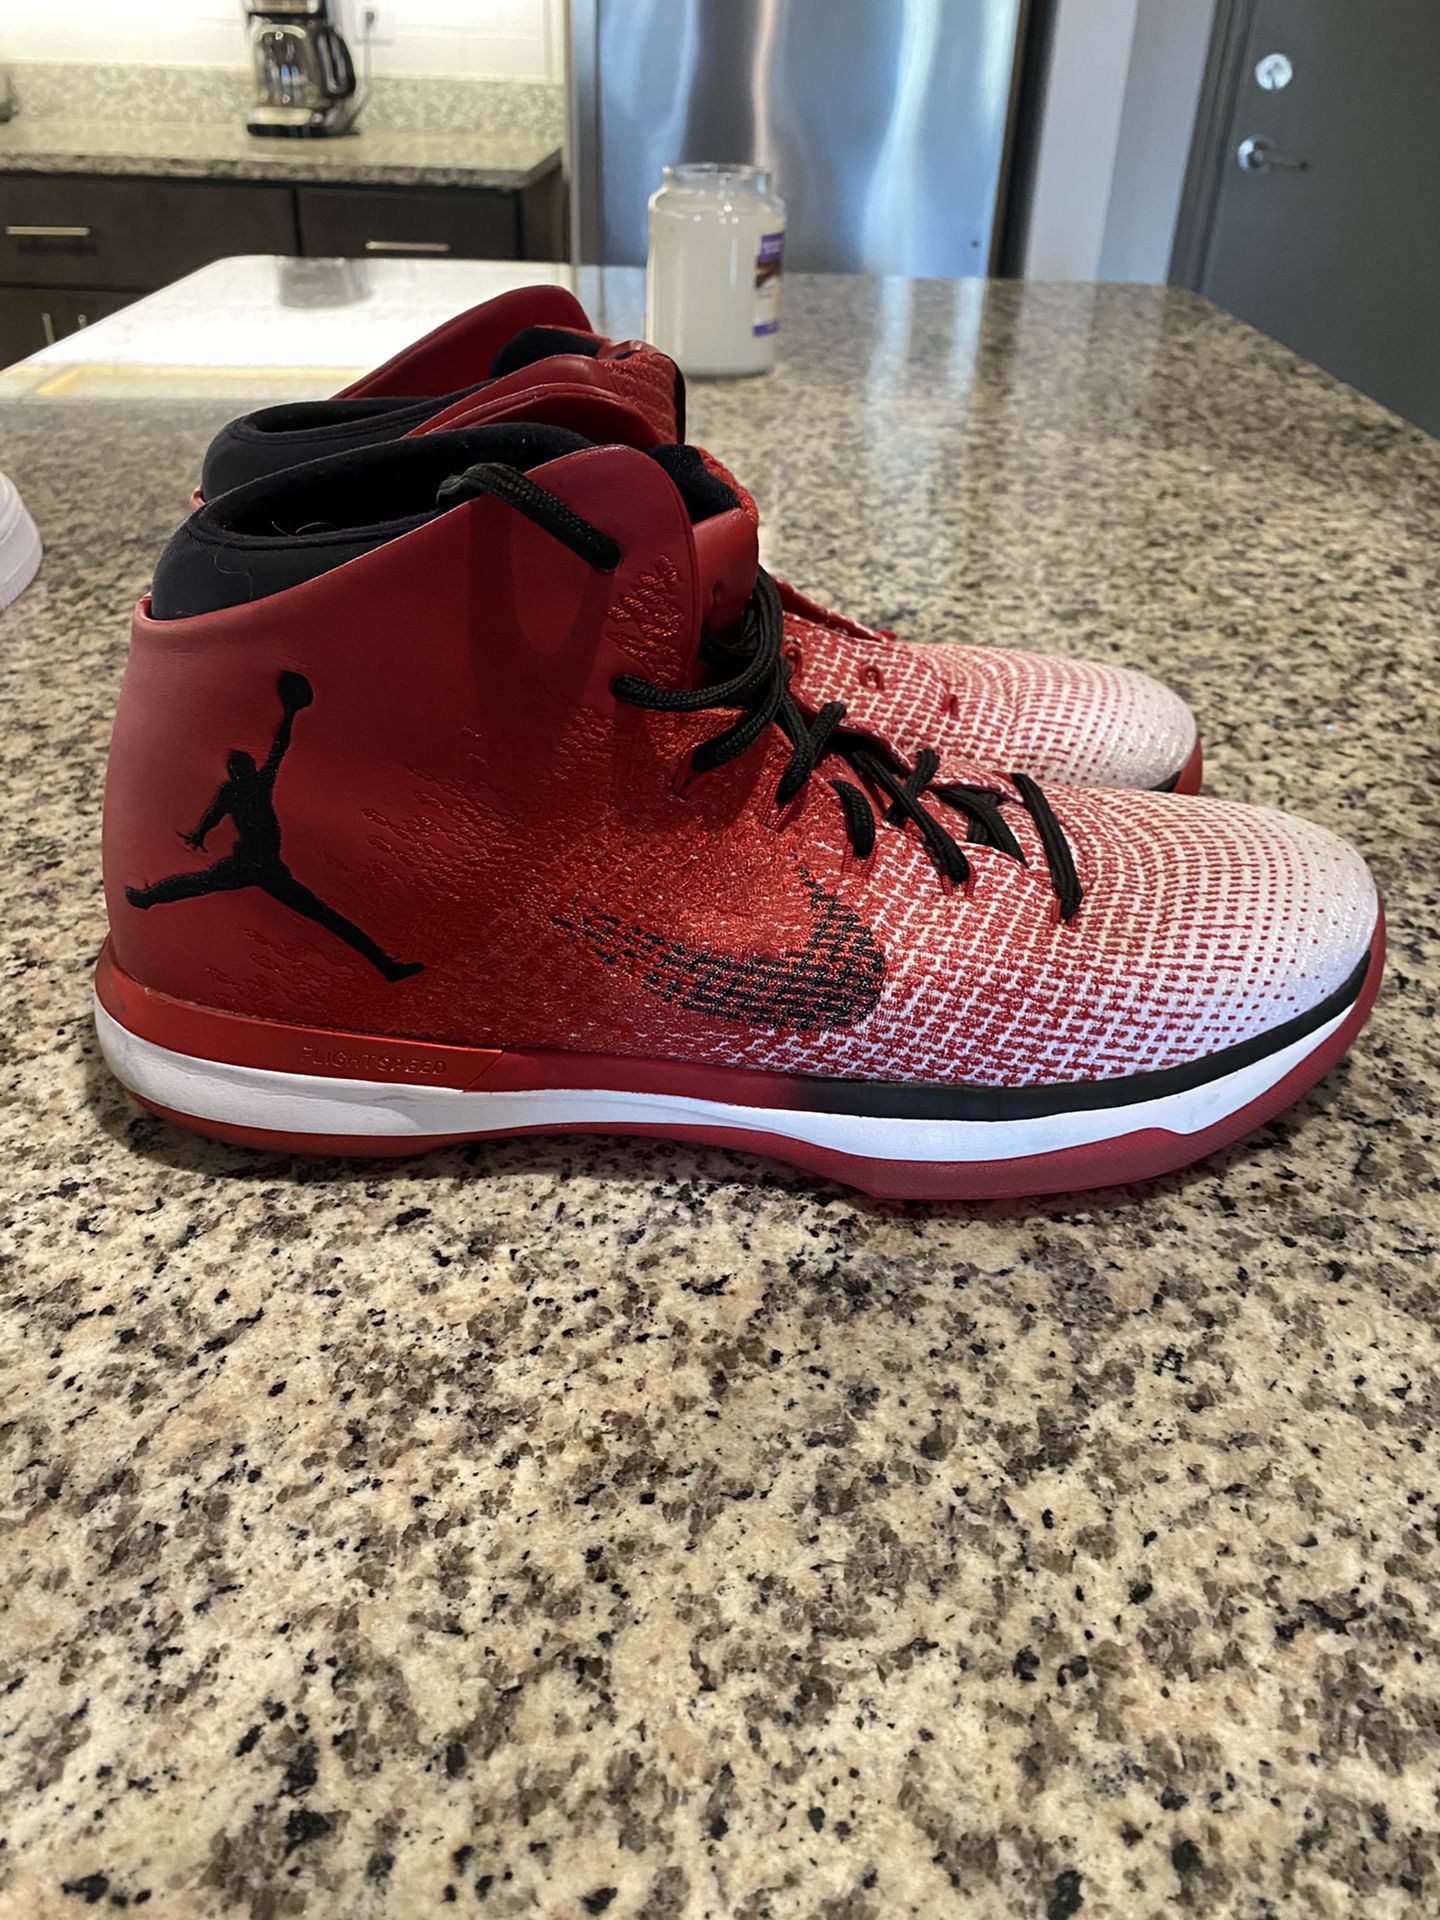 Jordan’s, Nike Air Force (Take all for $100)